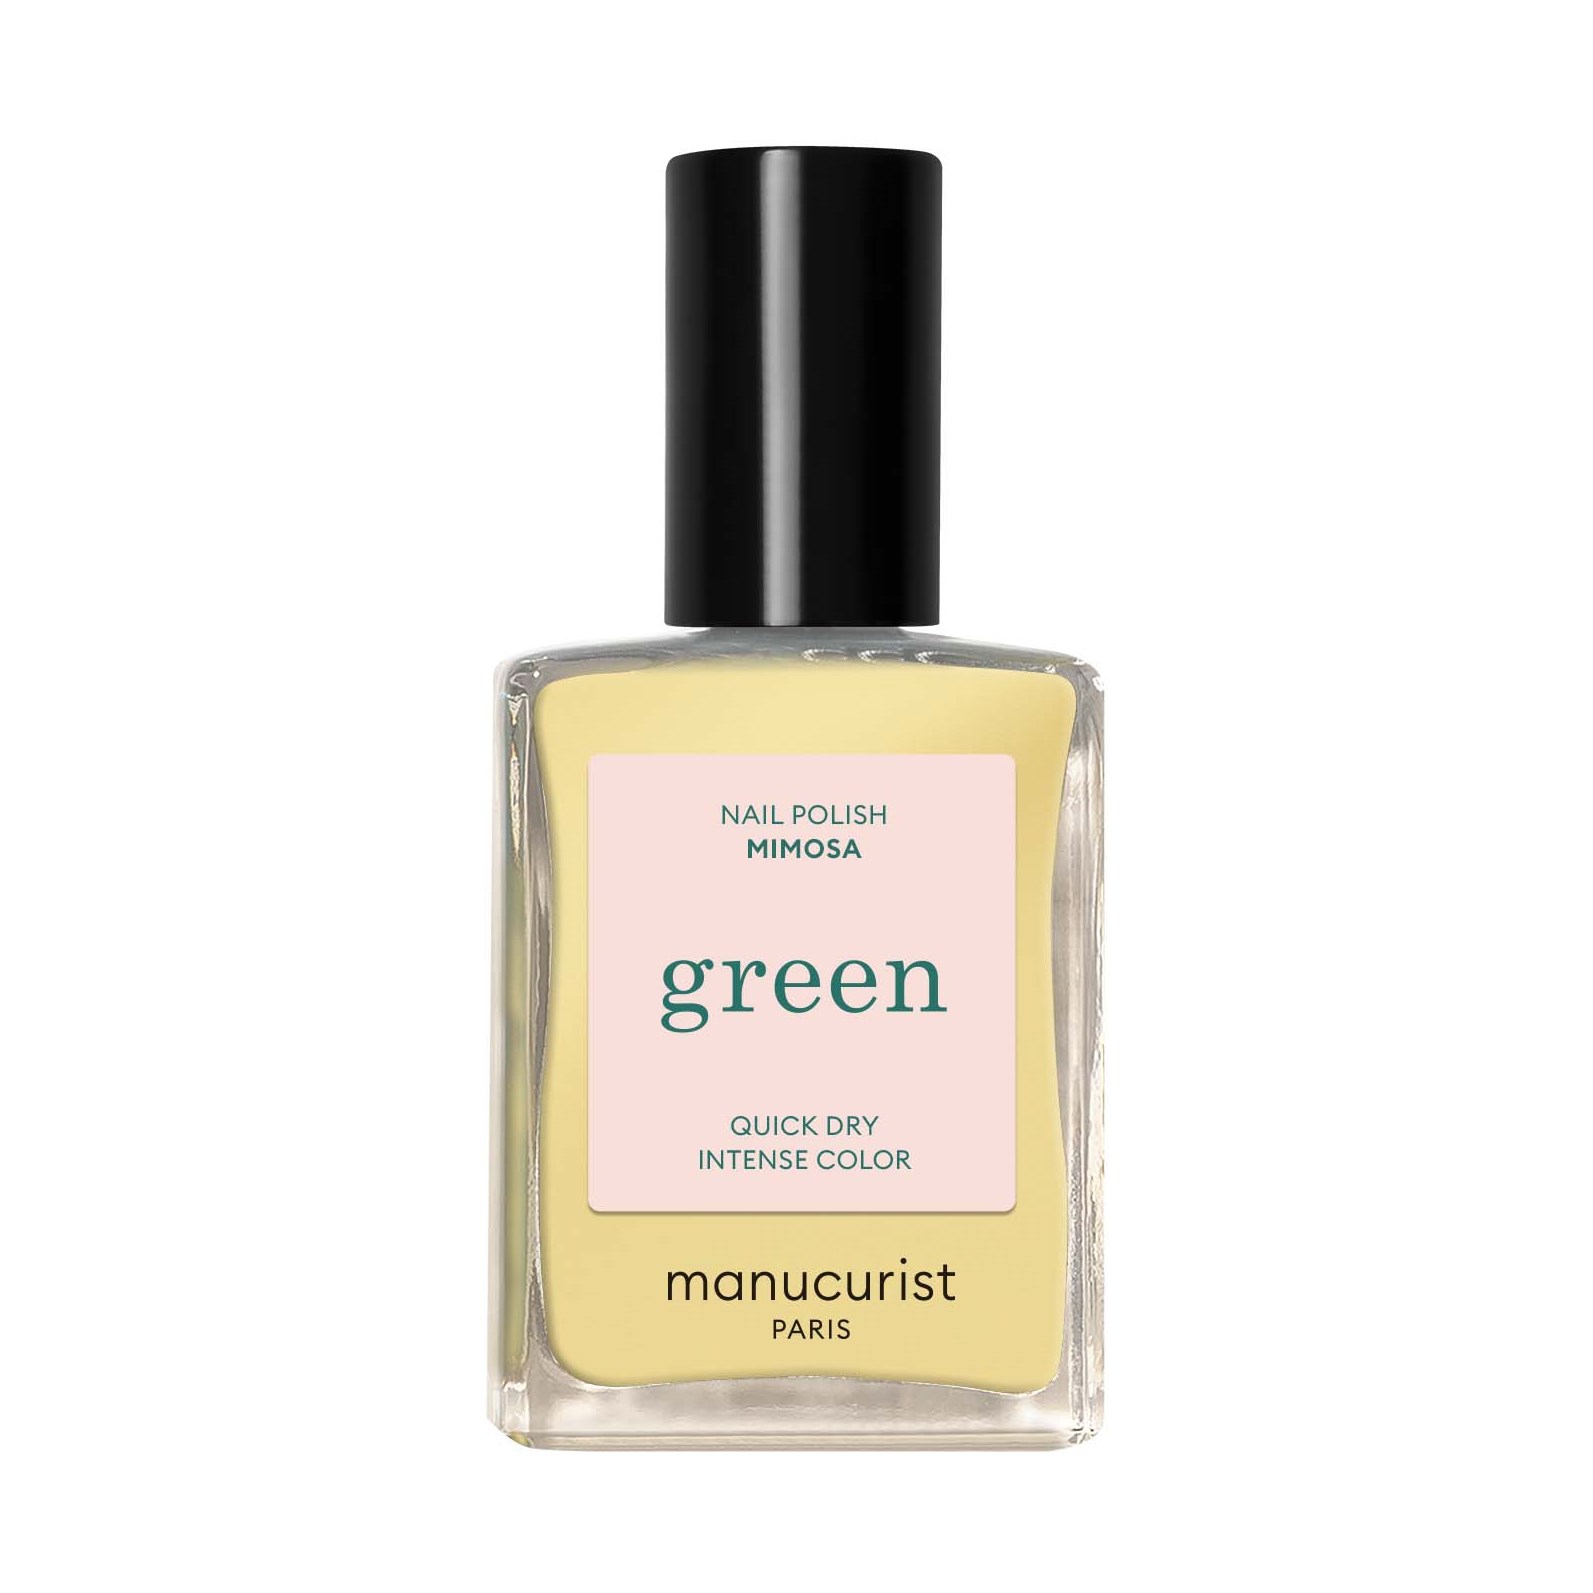 Läs mer om Manucurist Green Nail Polish Mimosa